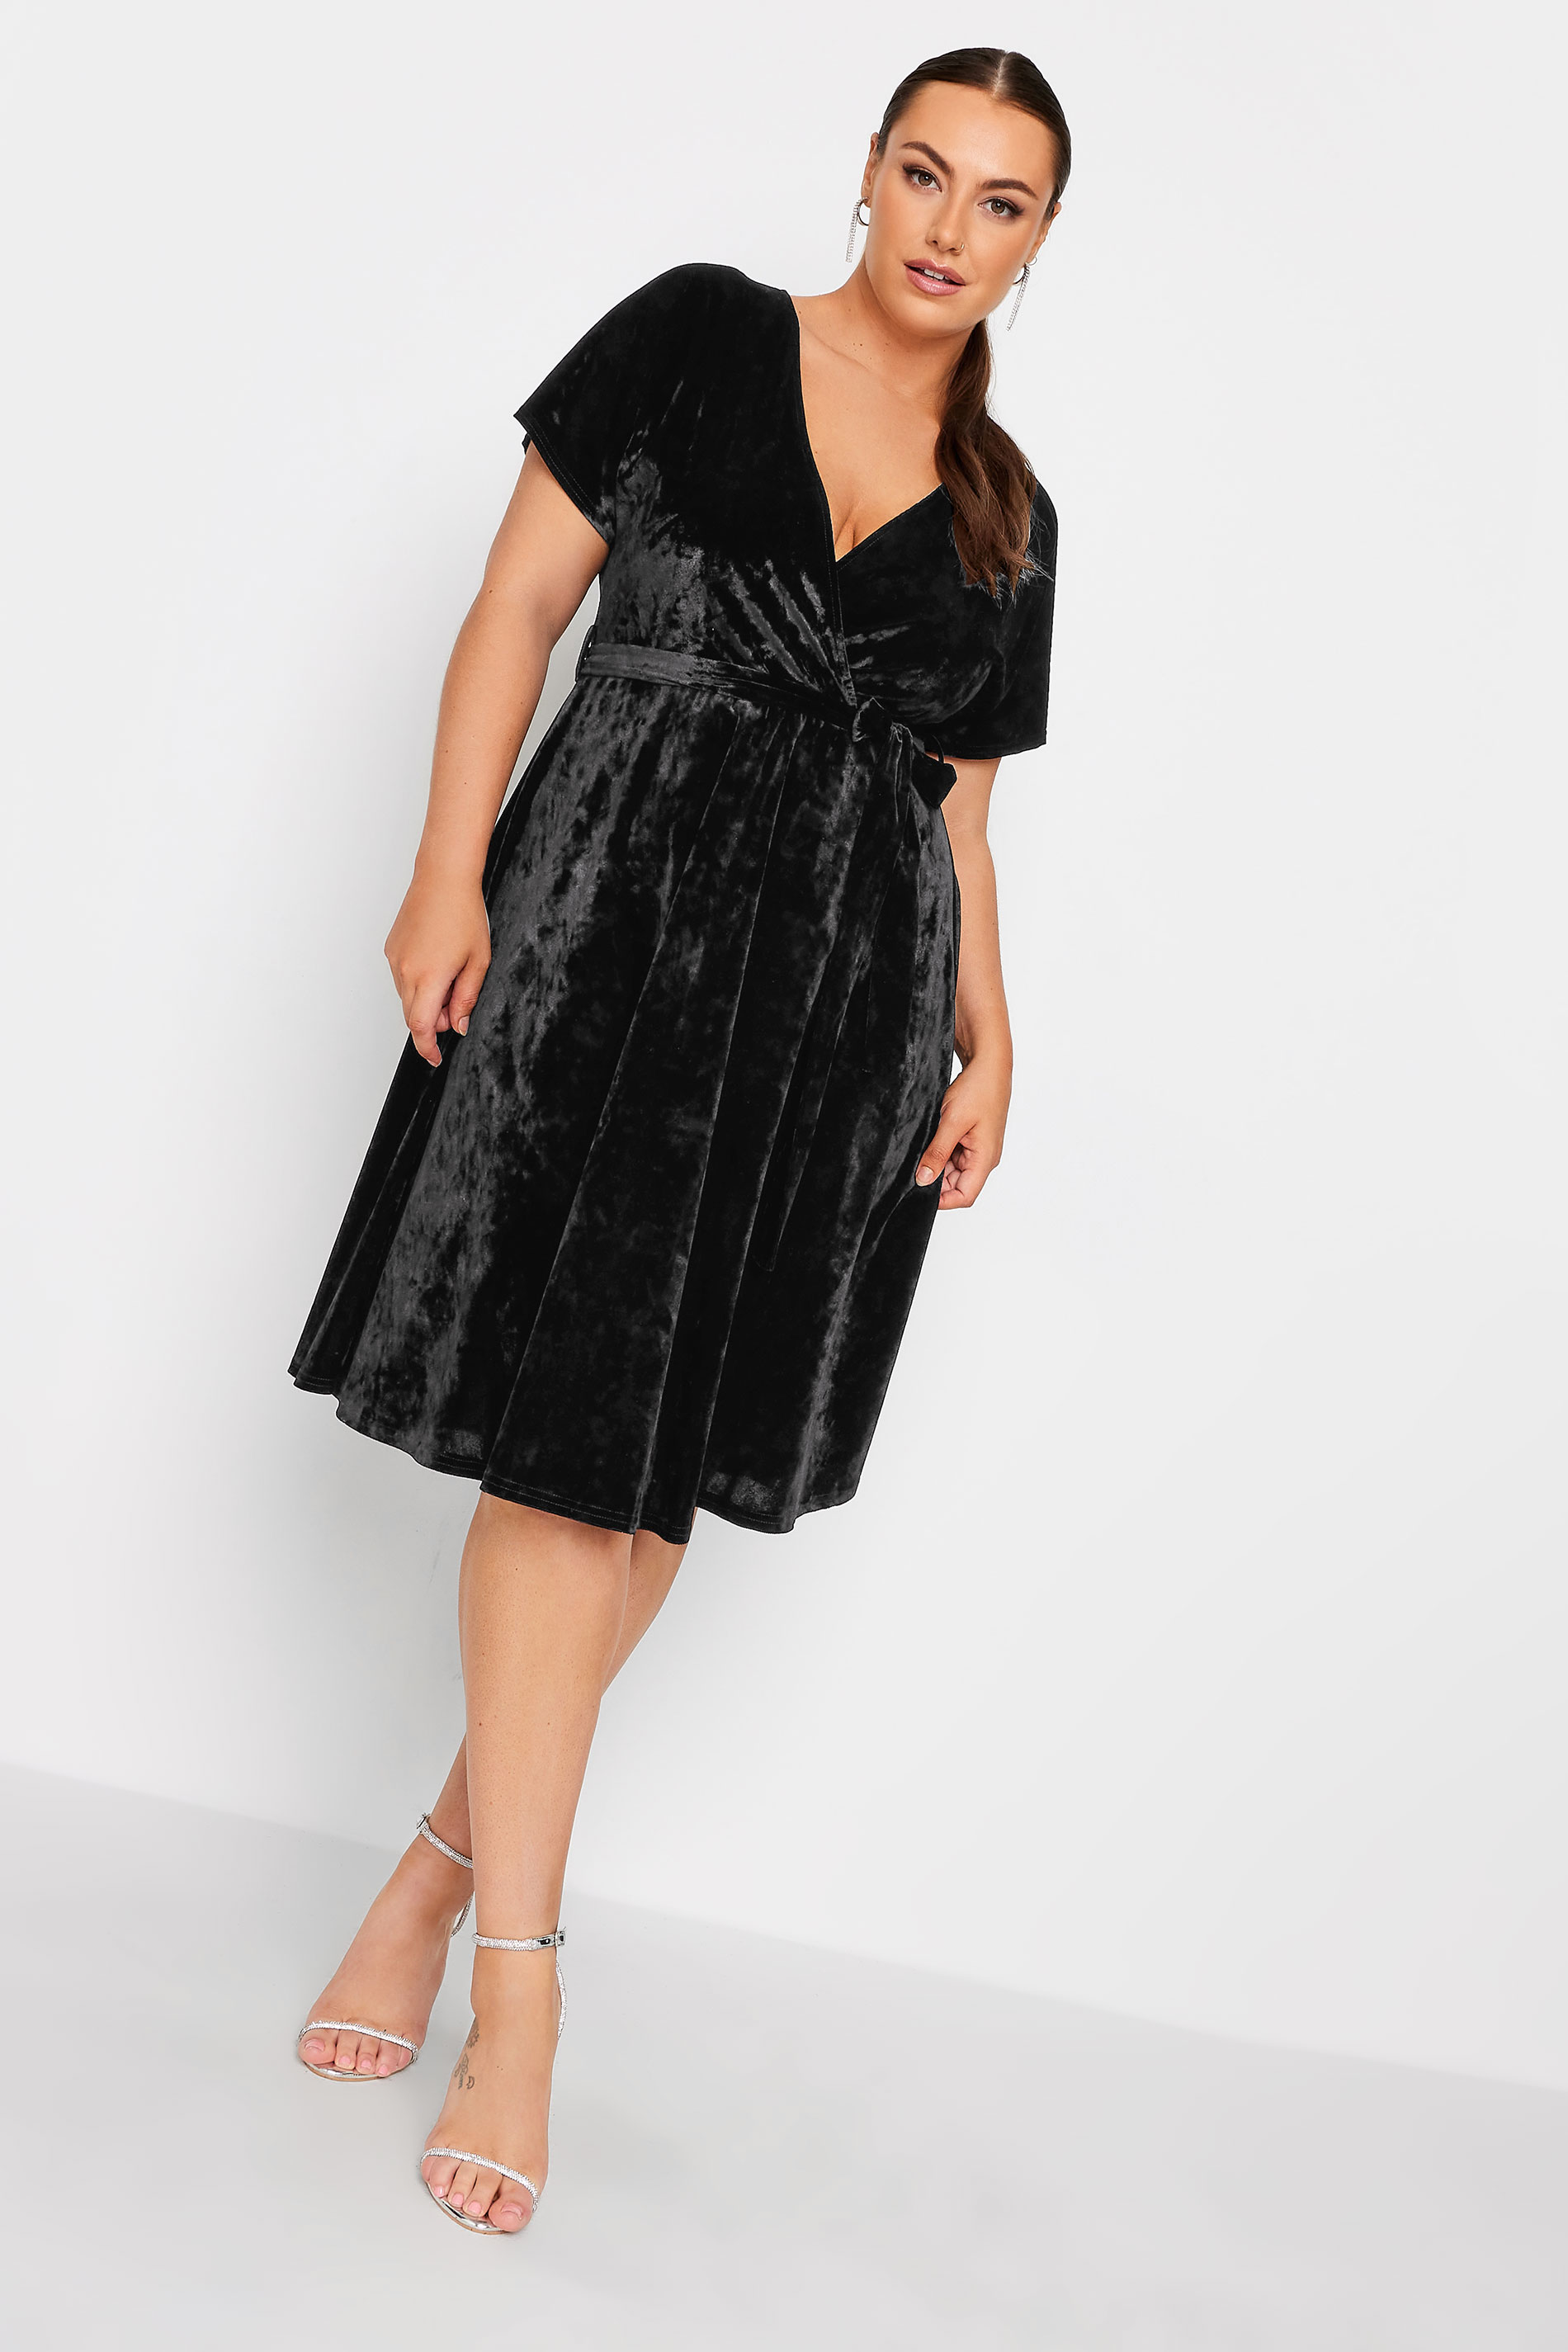 YOURS LONDON Plus Size Black Velvet Wrap Skater Dress | Yours Clothing 2